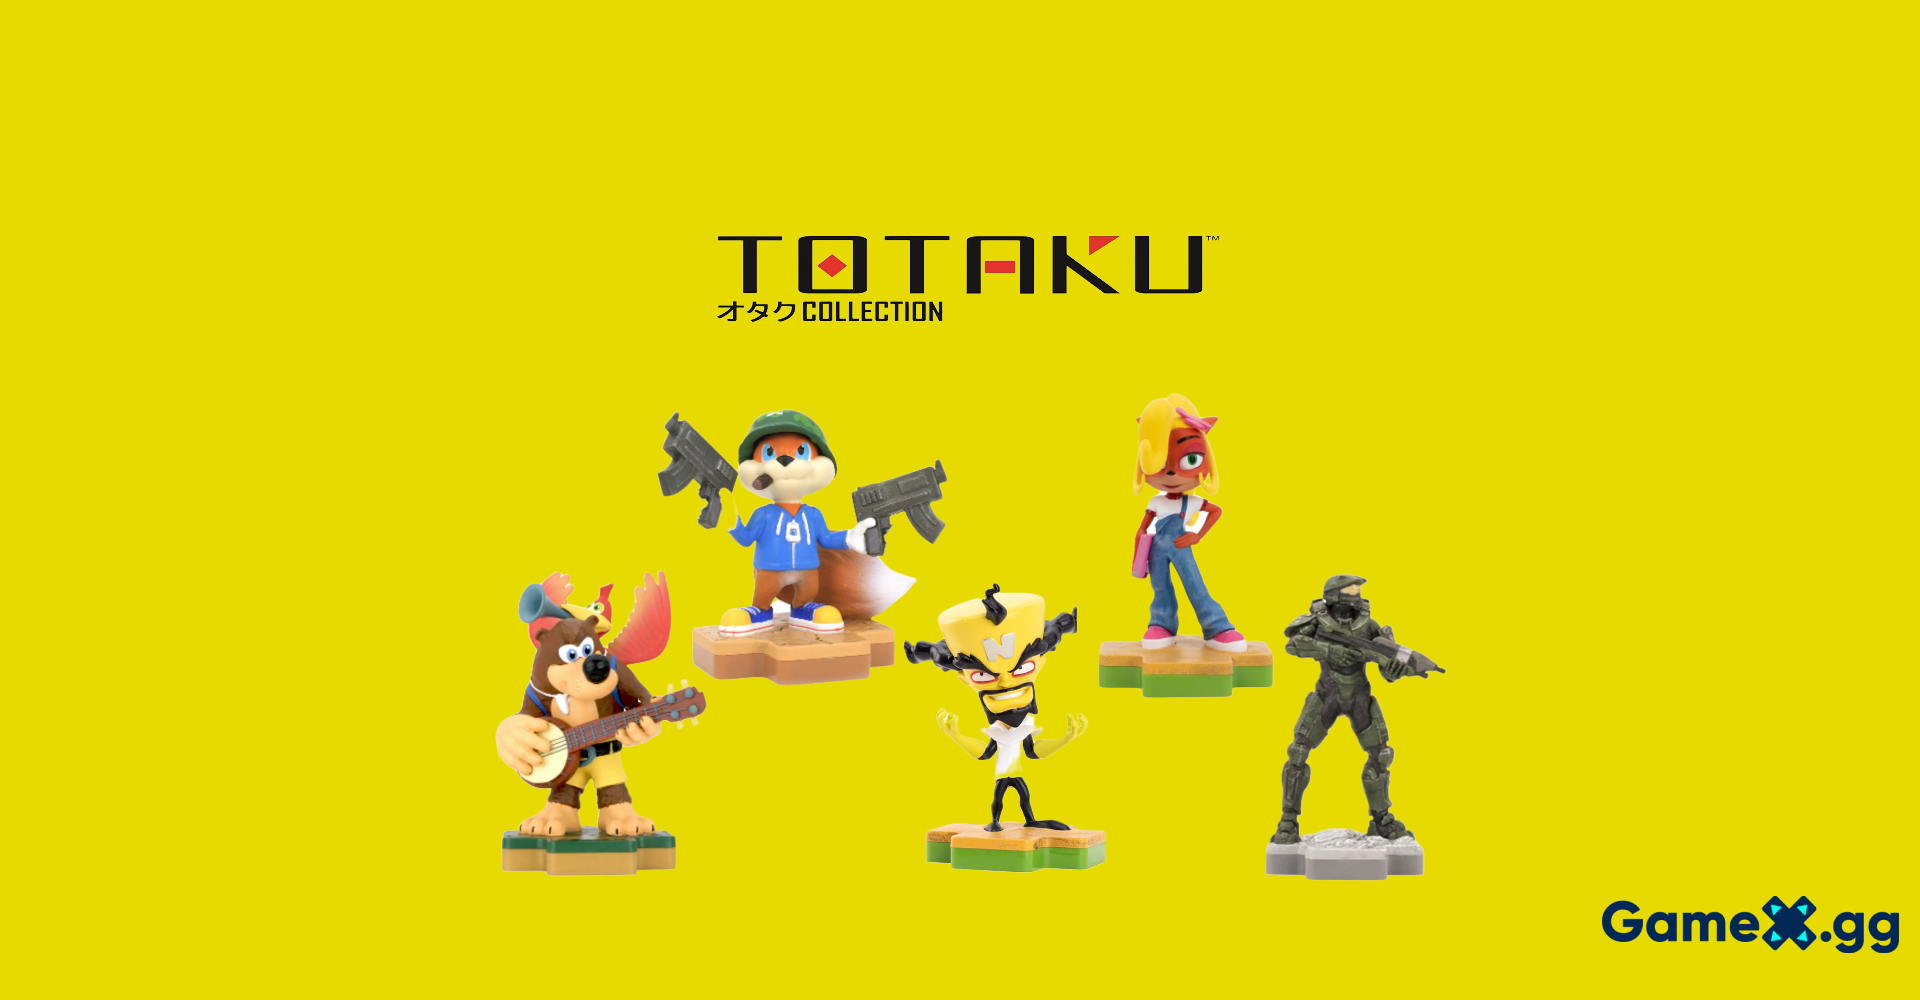 Totaku Figures